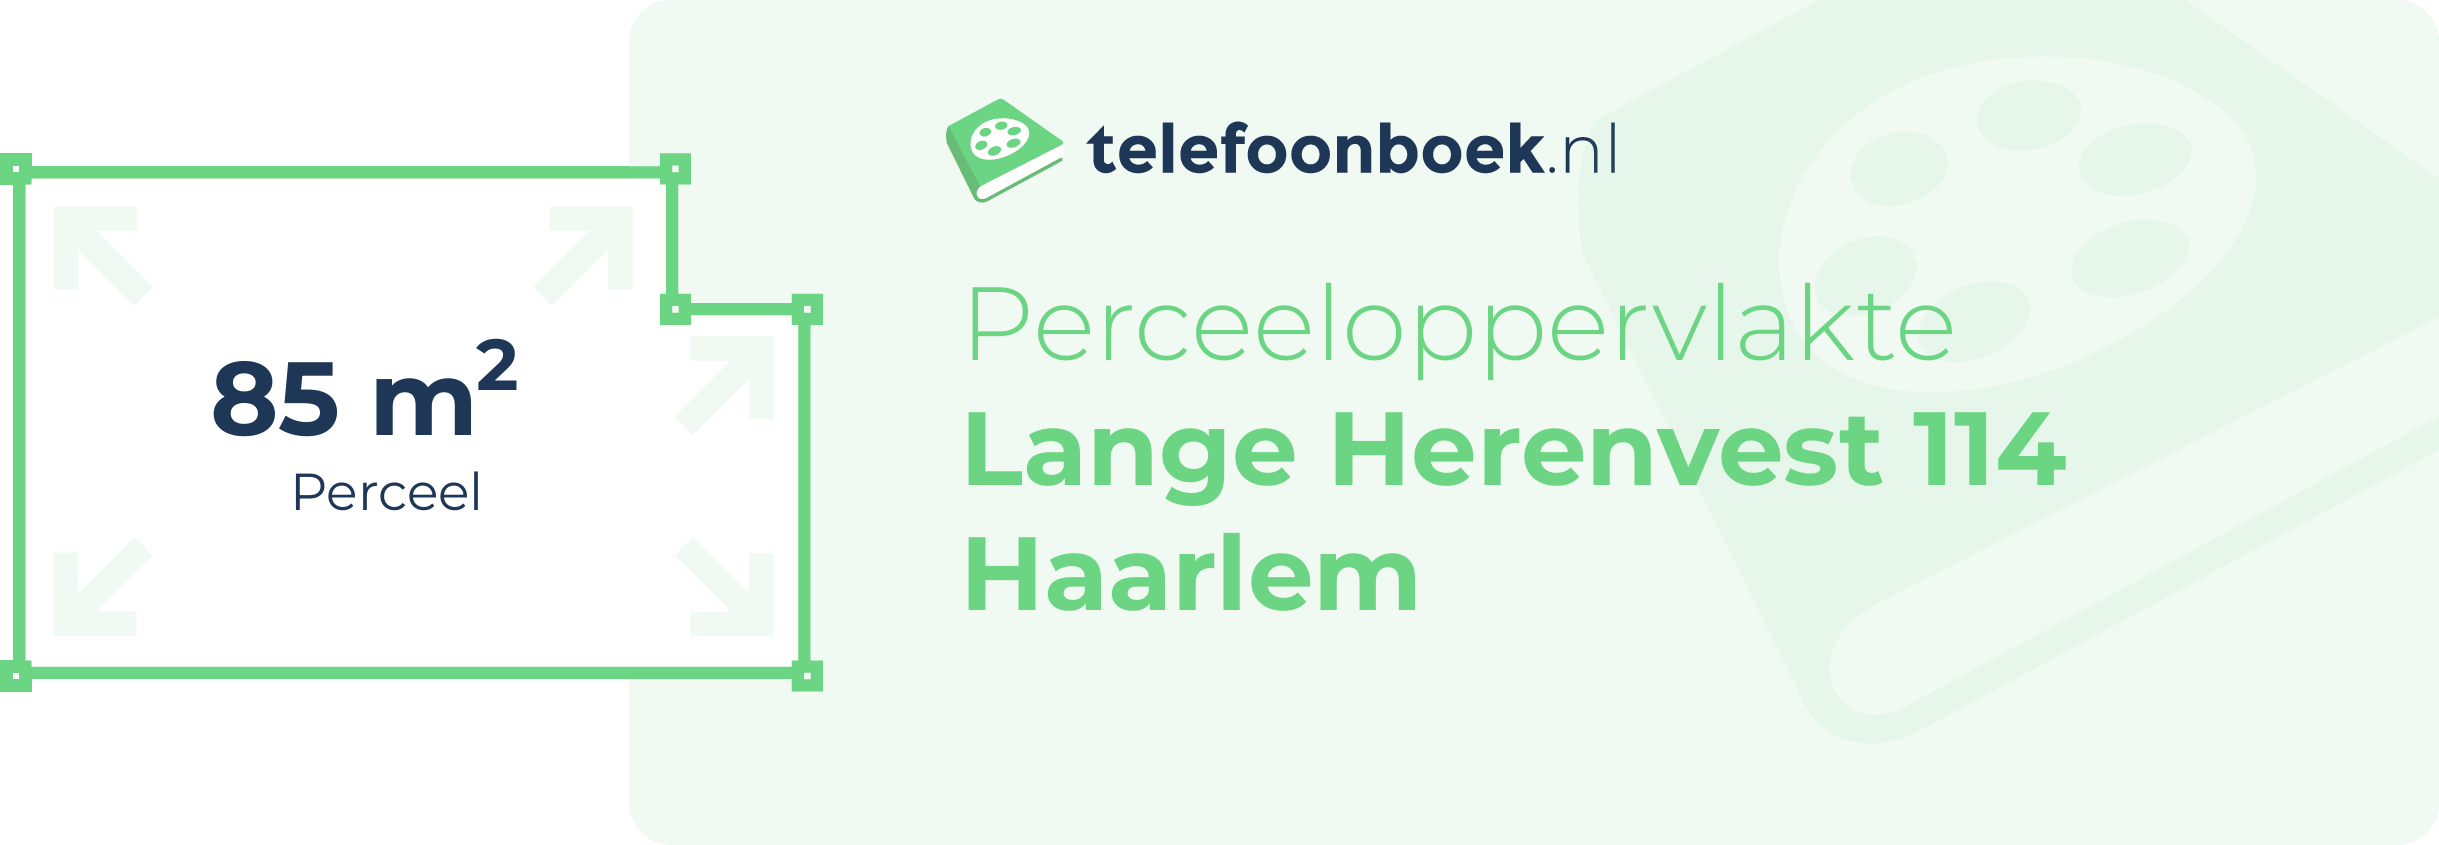 Perceeloppervlakte Lange Herenvest 114 Haarlem